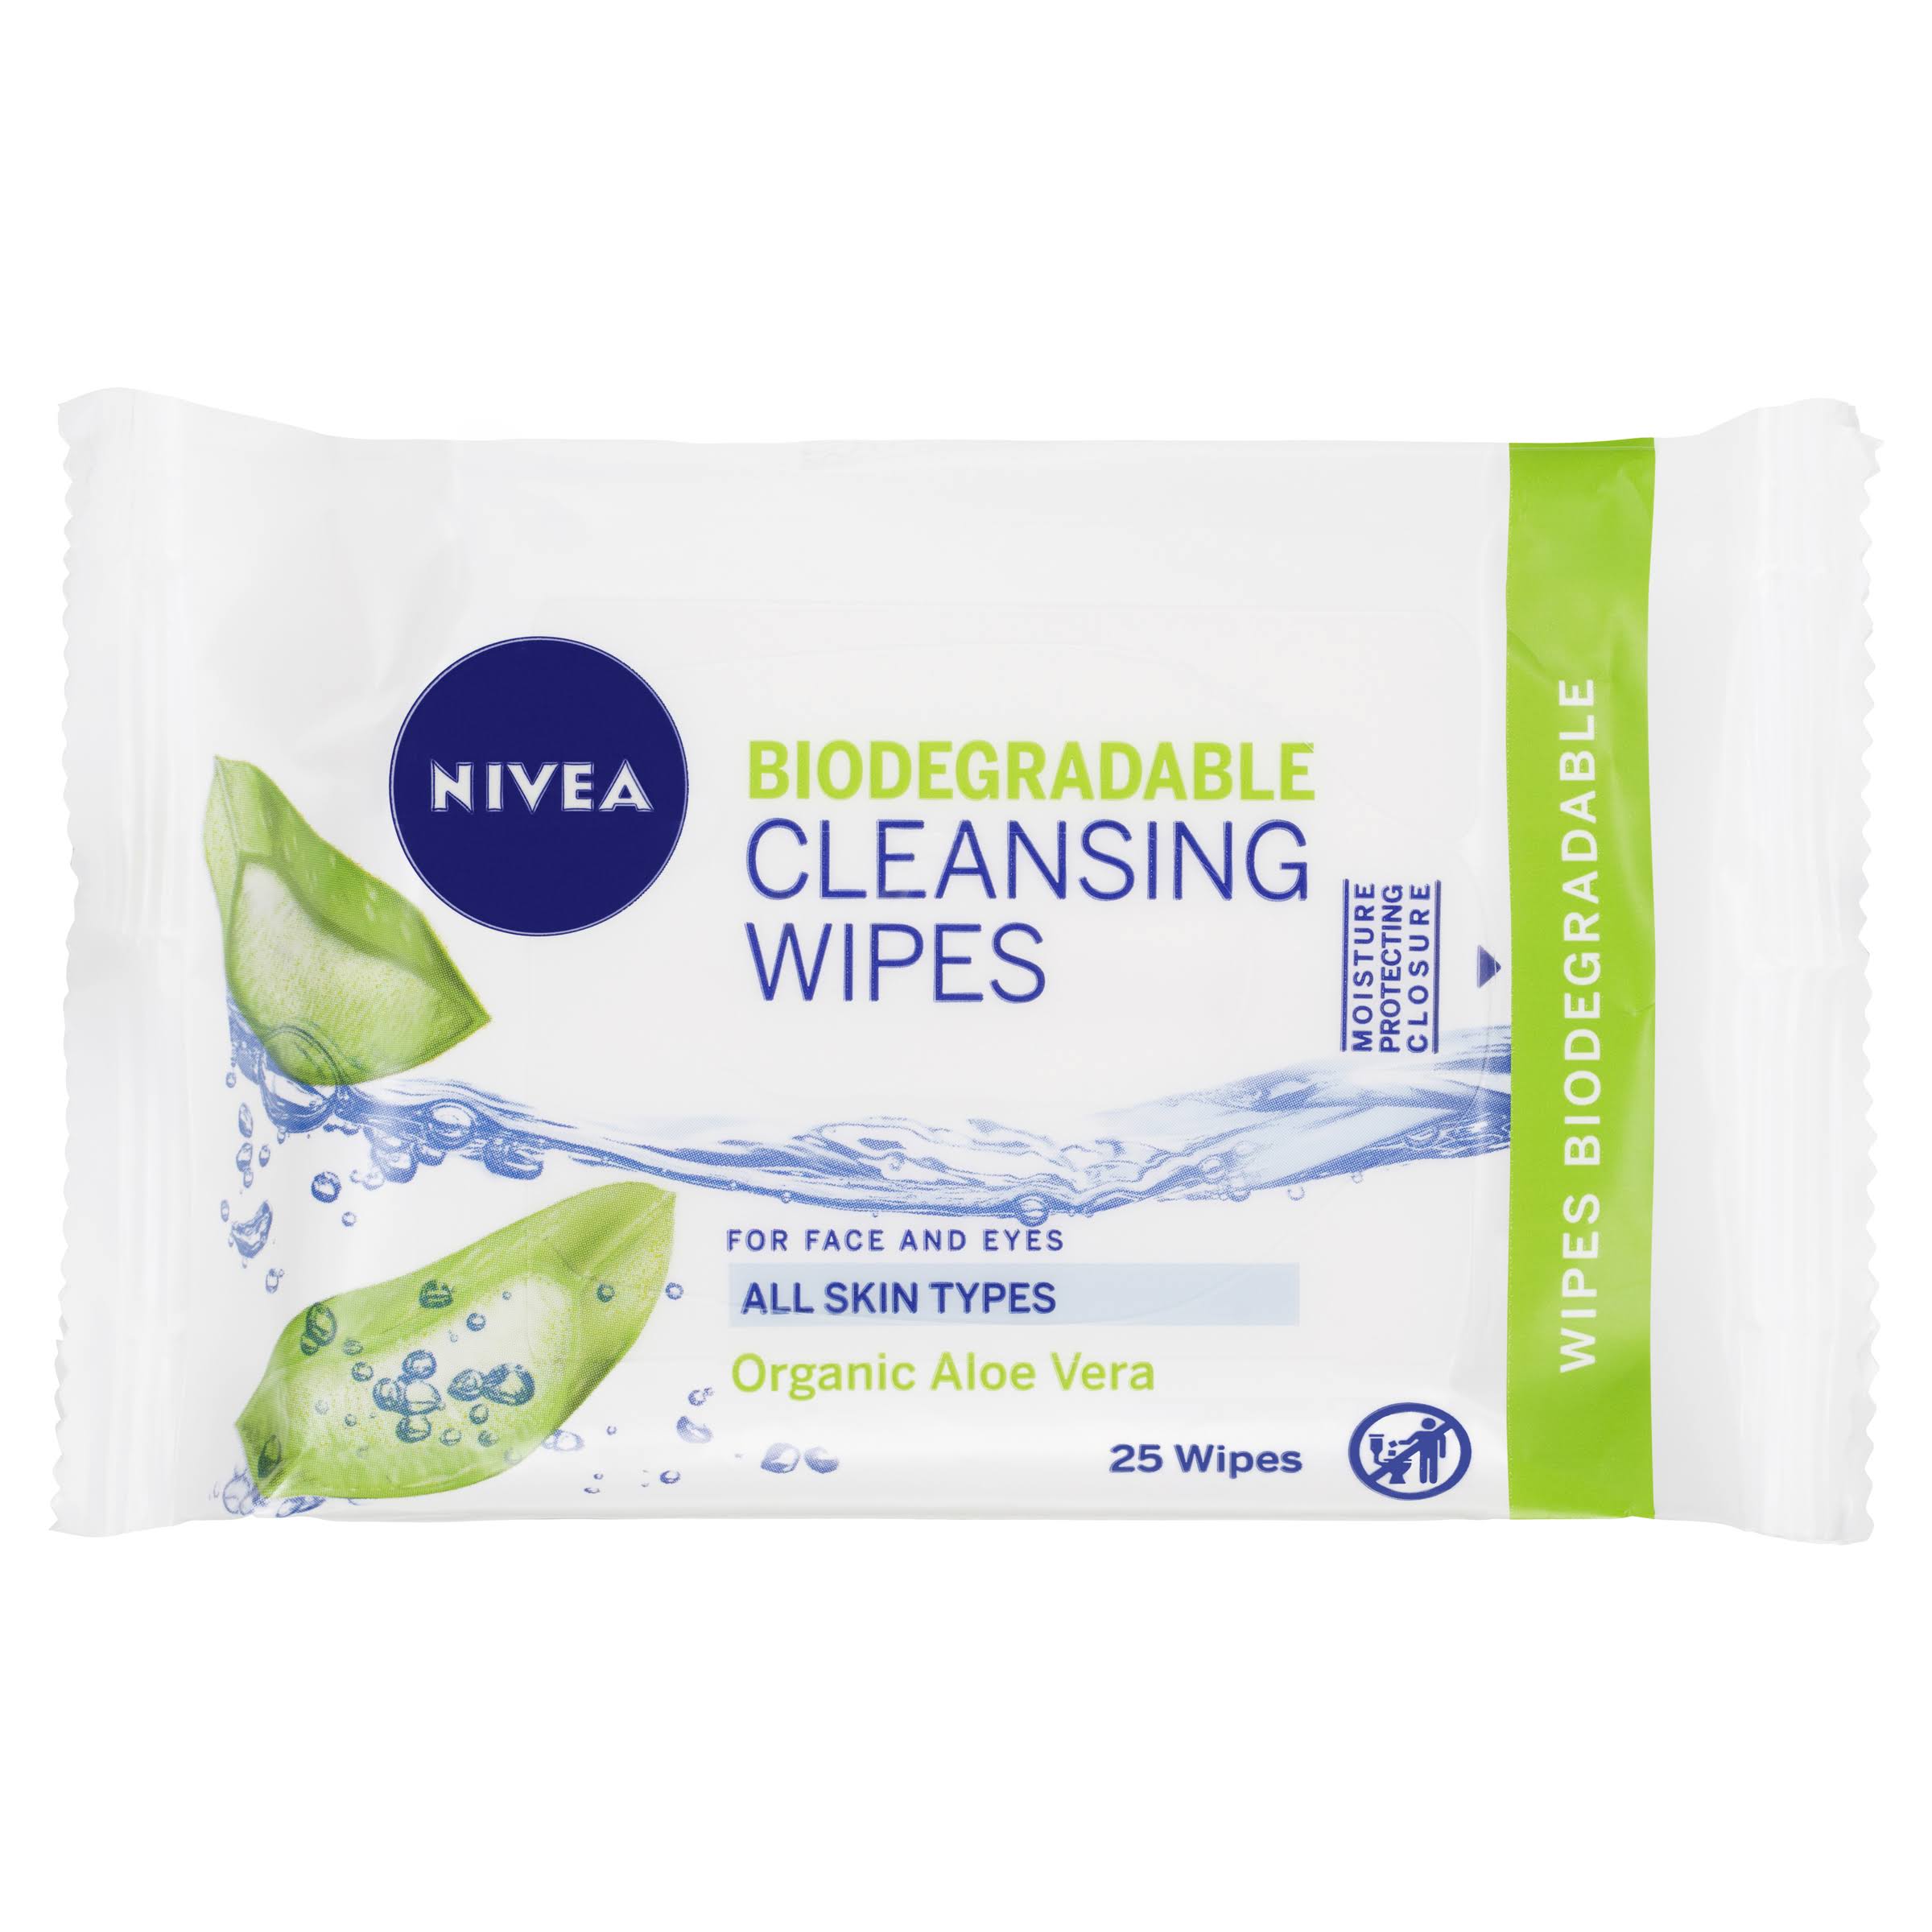 Nivea Biodegradable Cleansing Wipes - Organic Aloe Vera, 25pcs